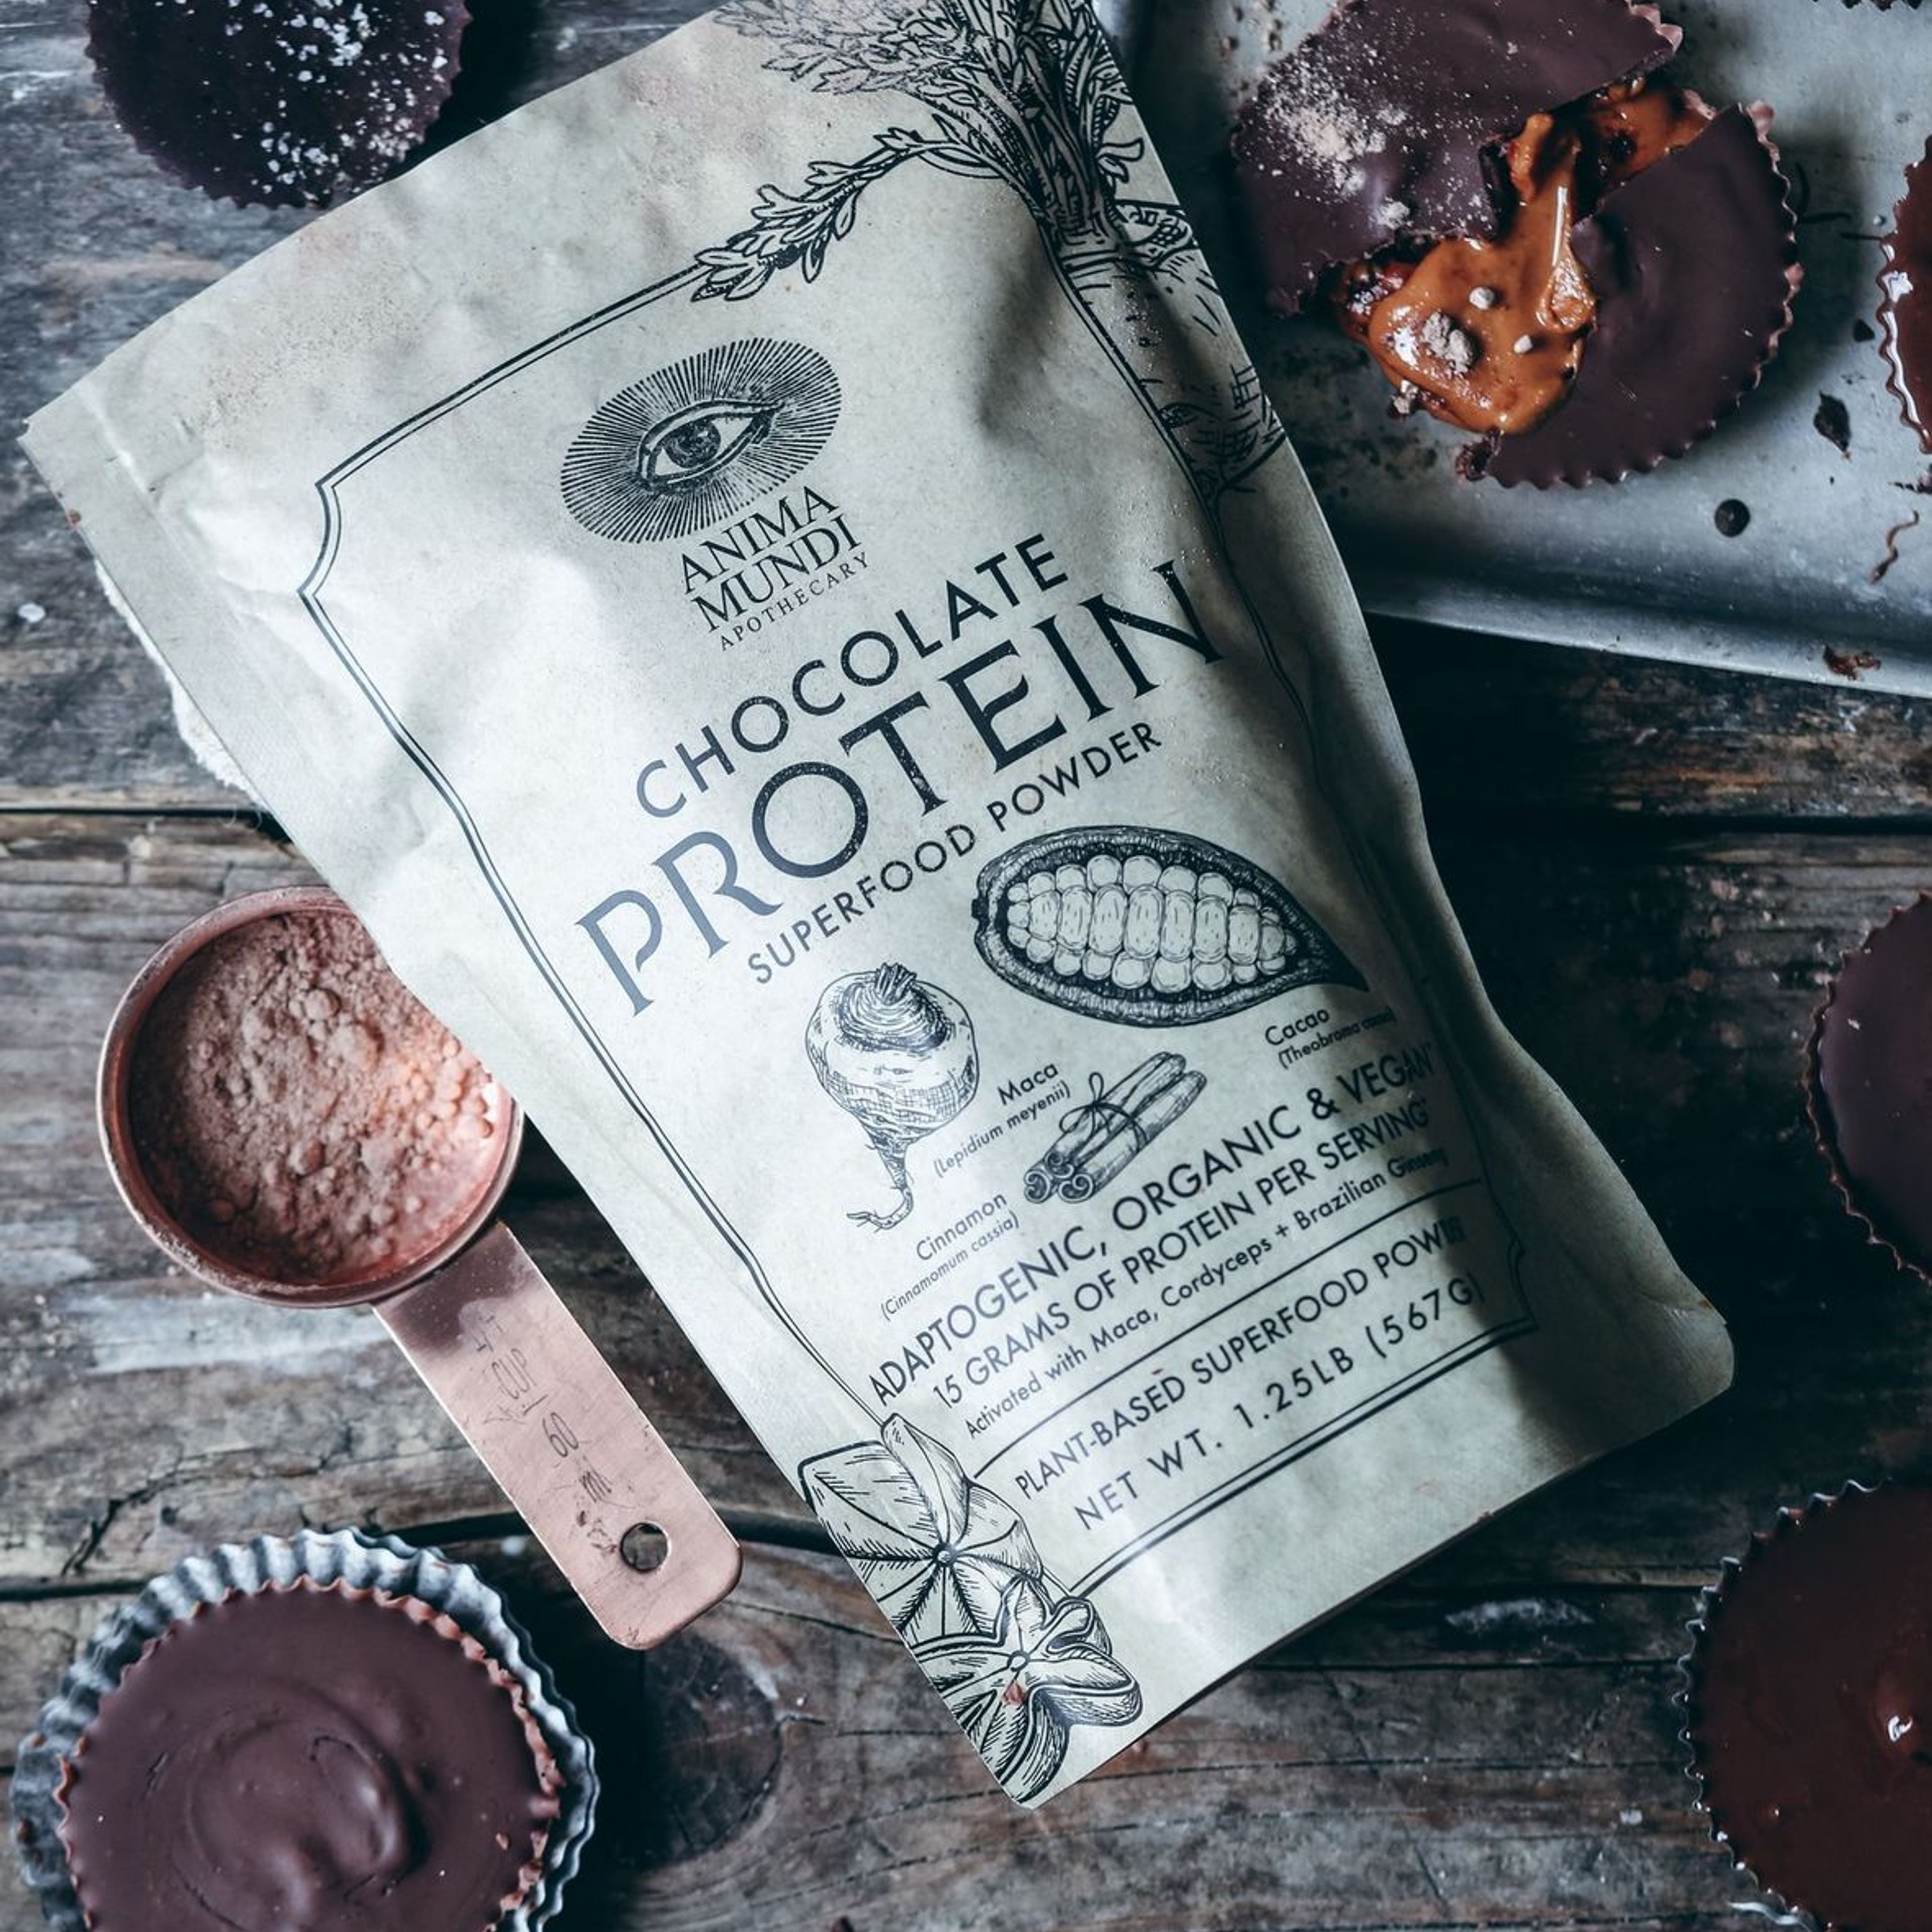 CHOCOLATE PROTEIN | Superfood Powder